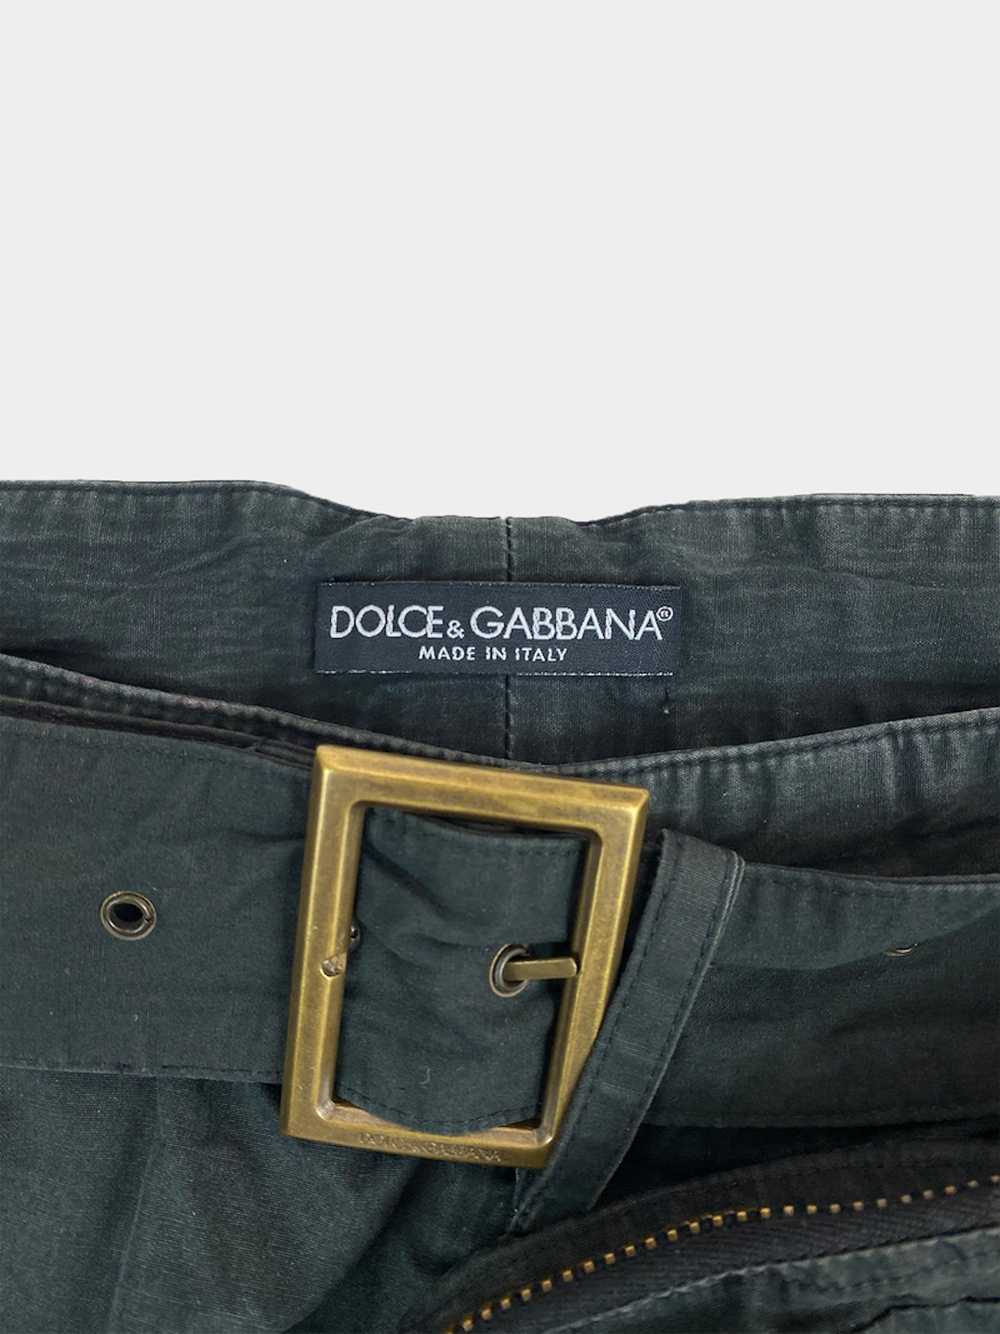 Dolce & Gabbana 2003 Cargo Pants - image 3